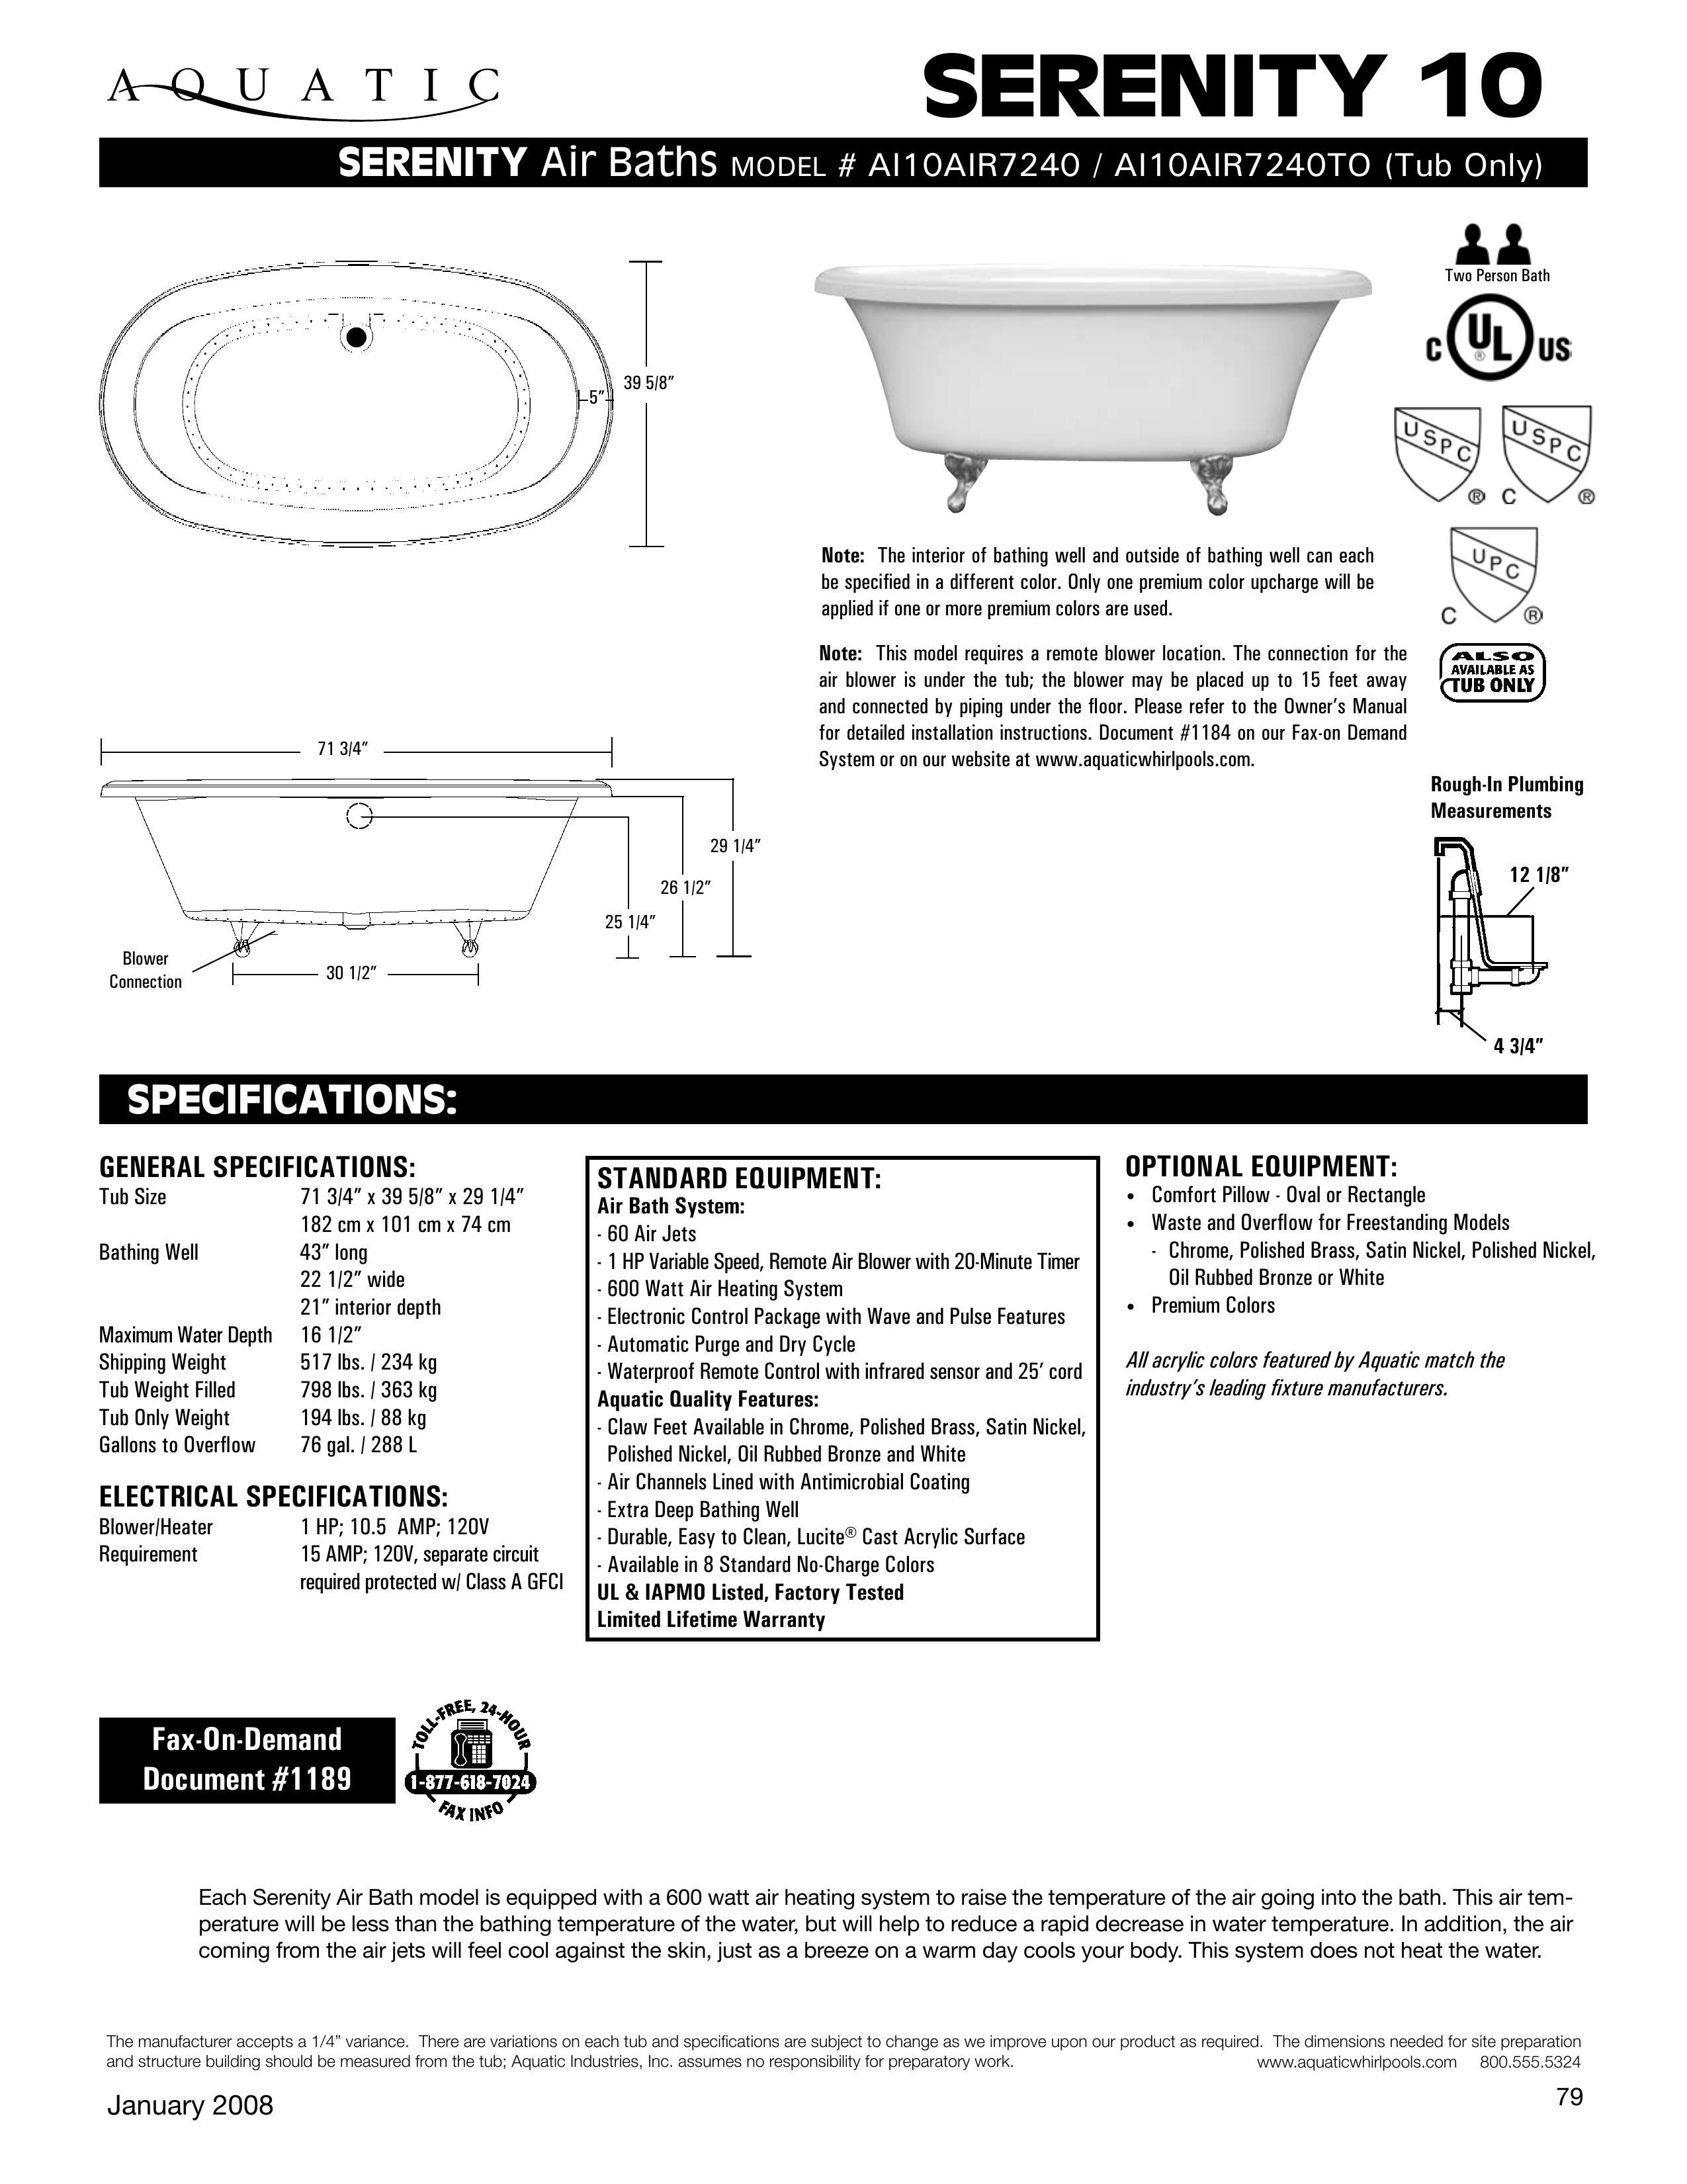 Aquatic AI10AIR7240TO Hot Tub User Manual